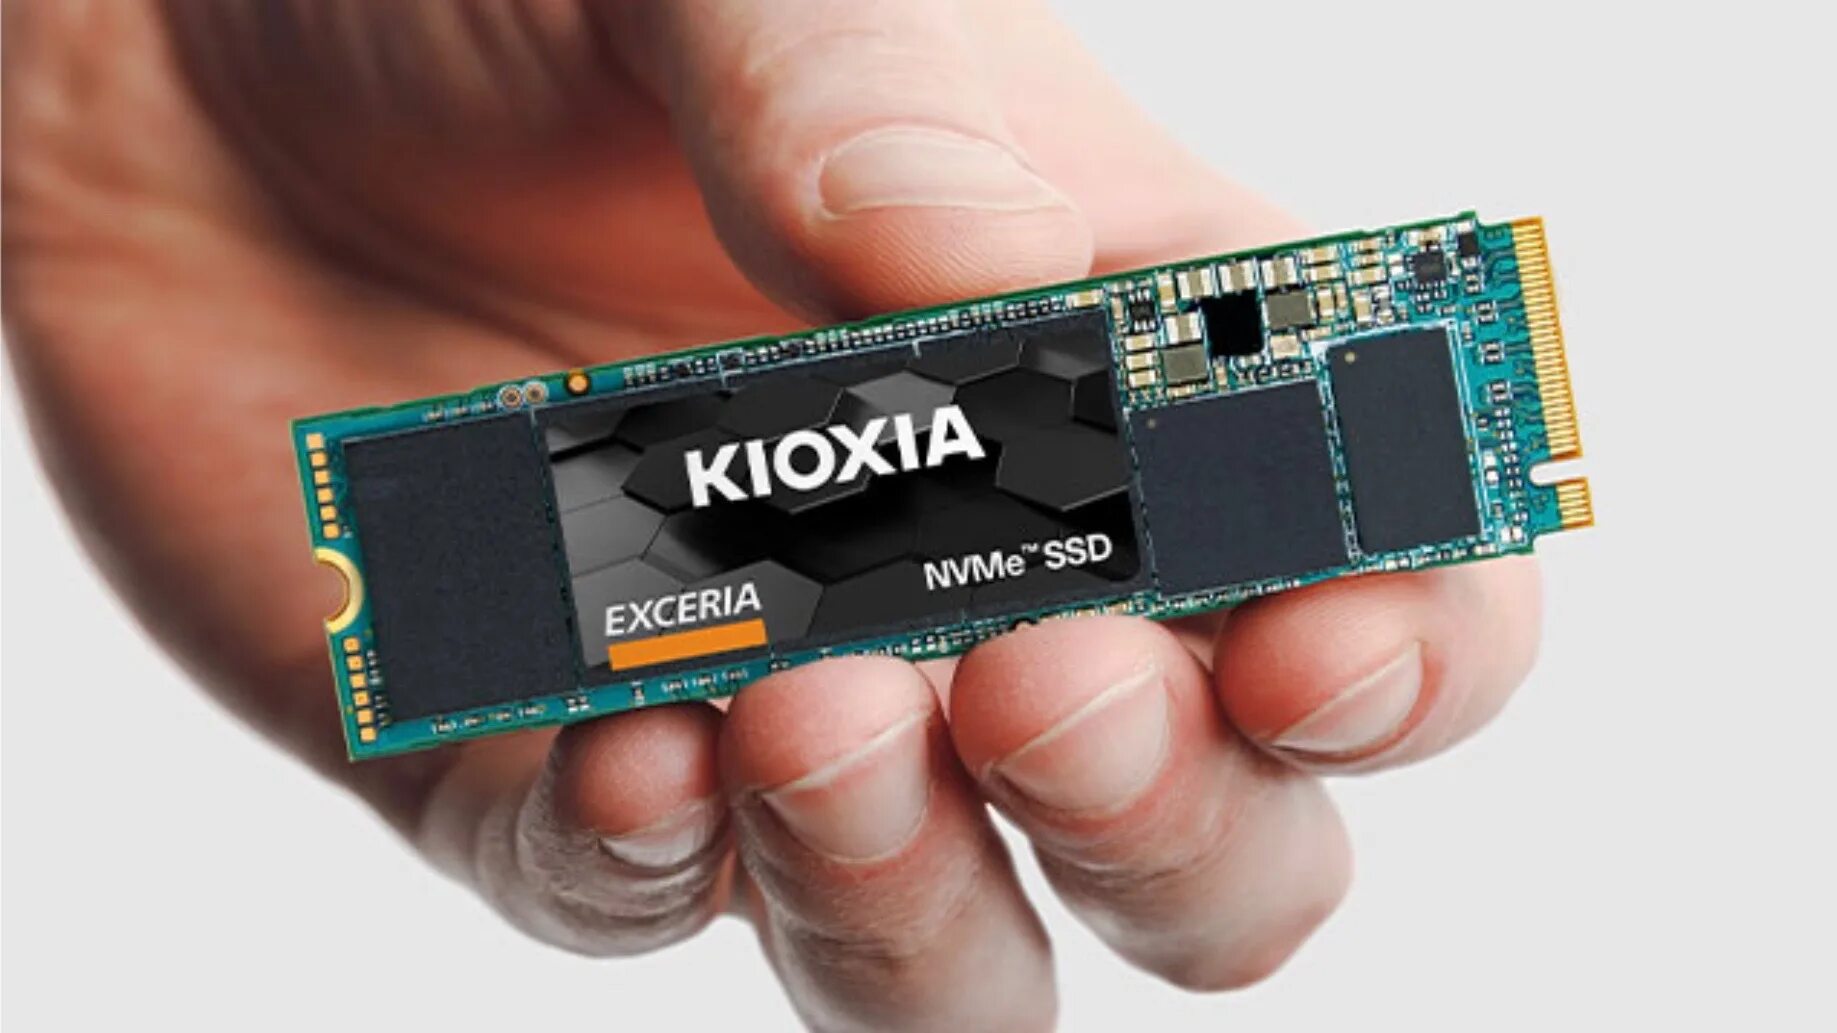 Производители чипов памяти. NVME kioxia. SSD m2 NVME. SSD накопитель kioxia Exceria g2 NVME TB. SSD новая поколения.